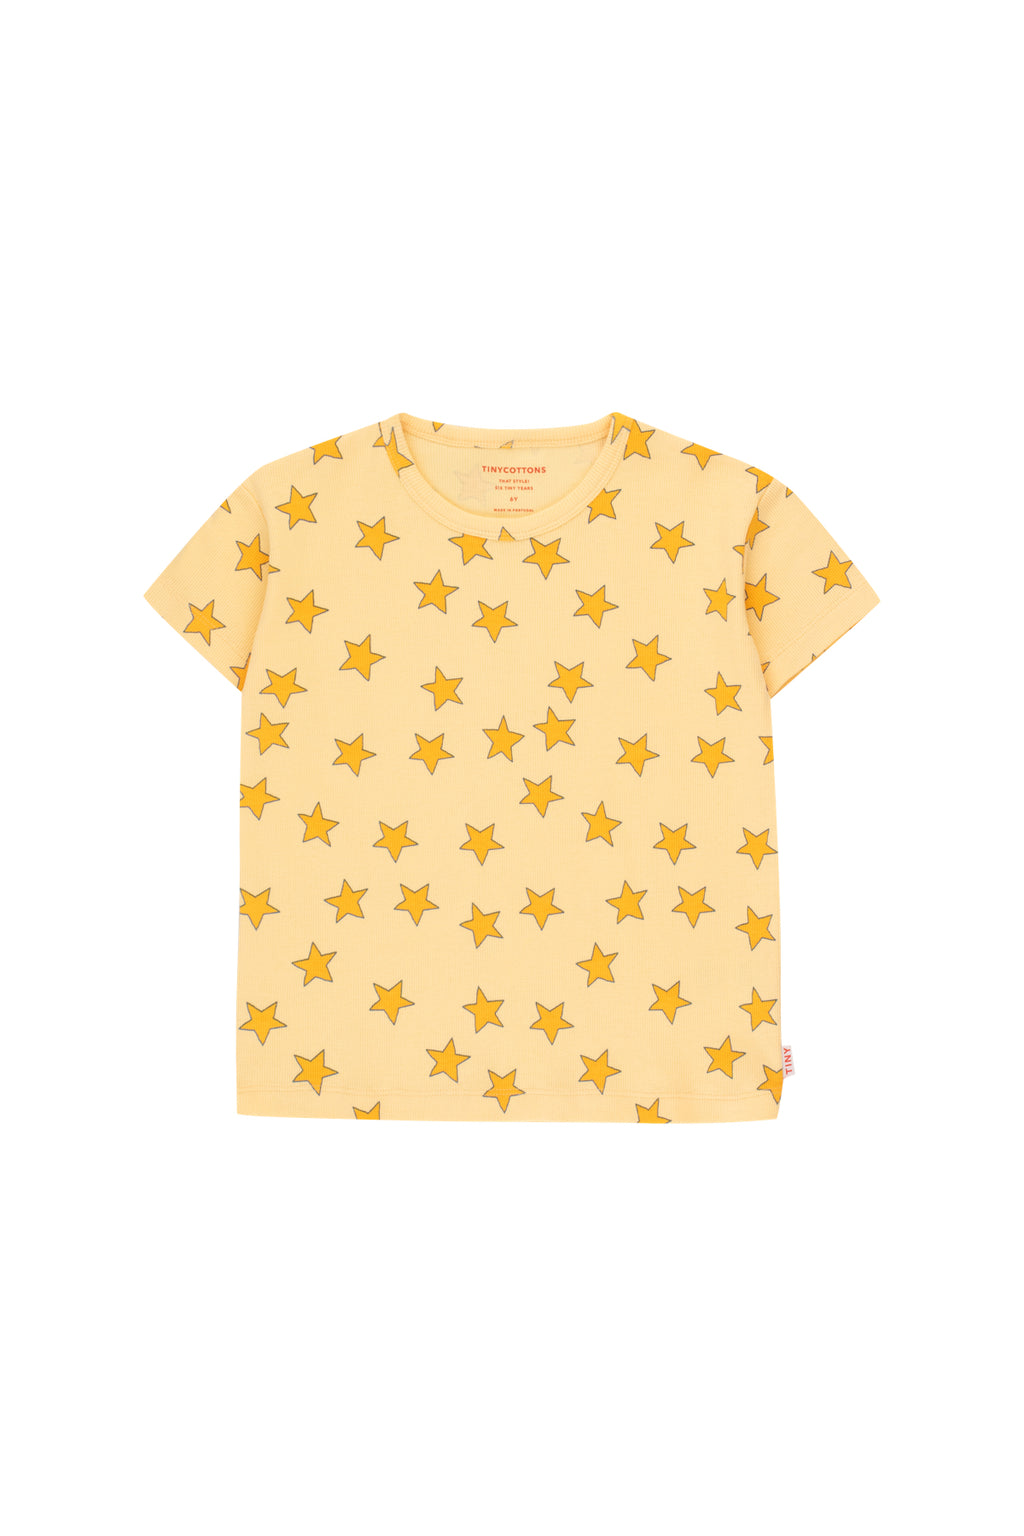 Tiny Cottons Stars Tee - Mellow Yellow